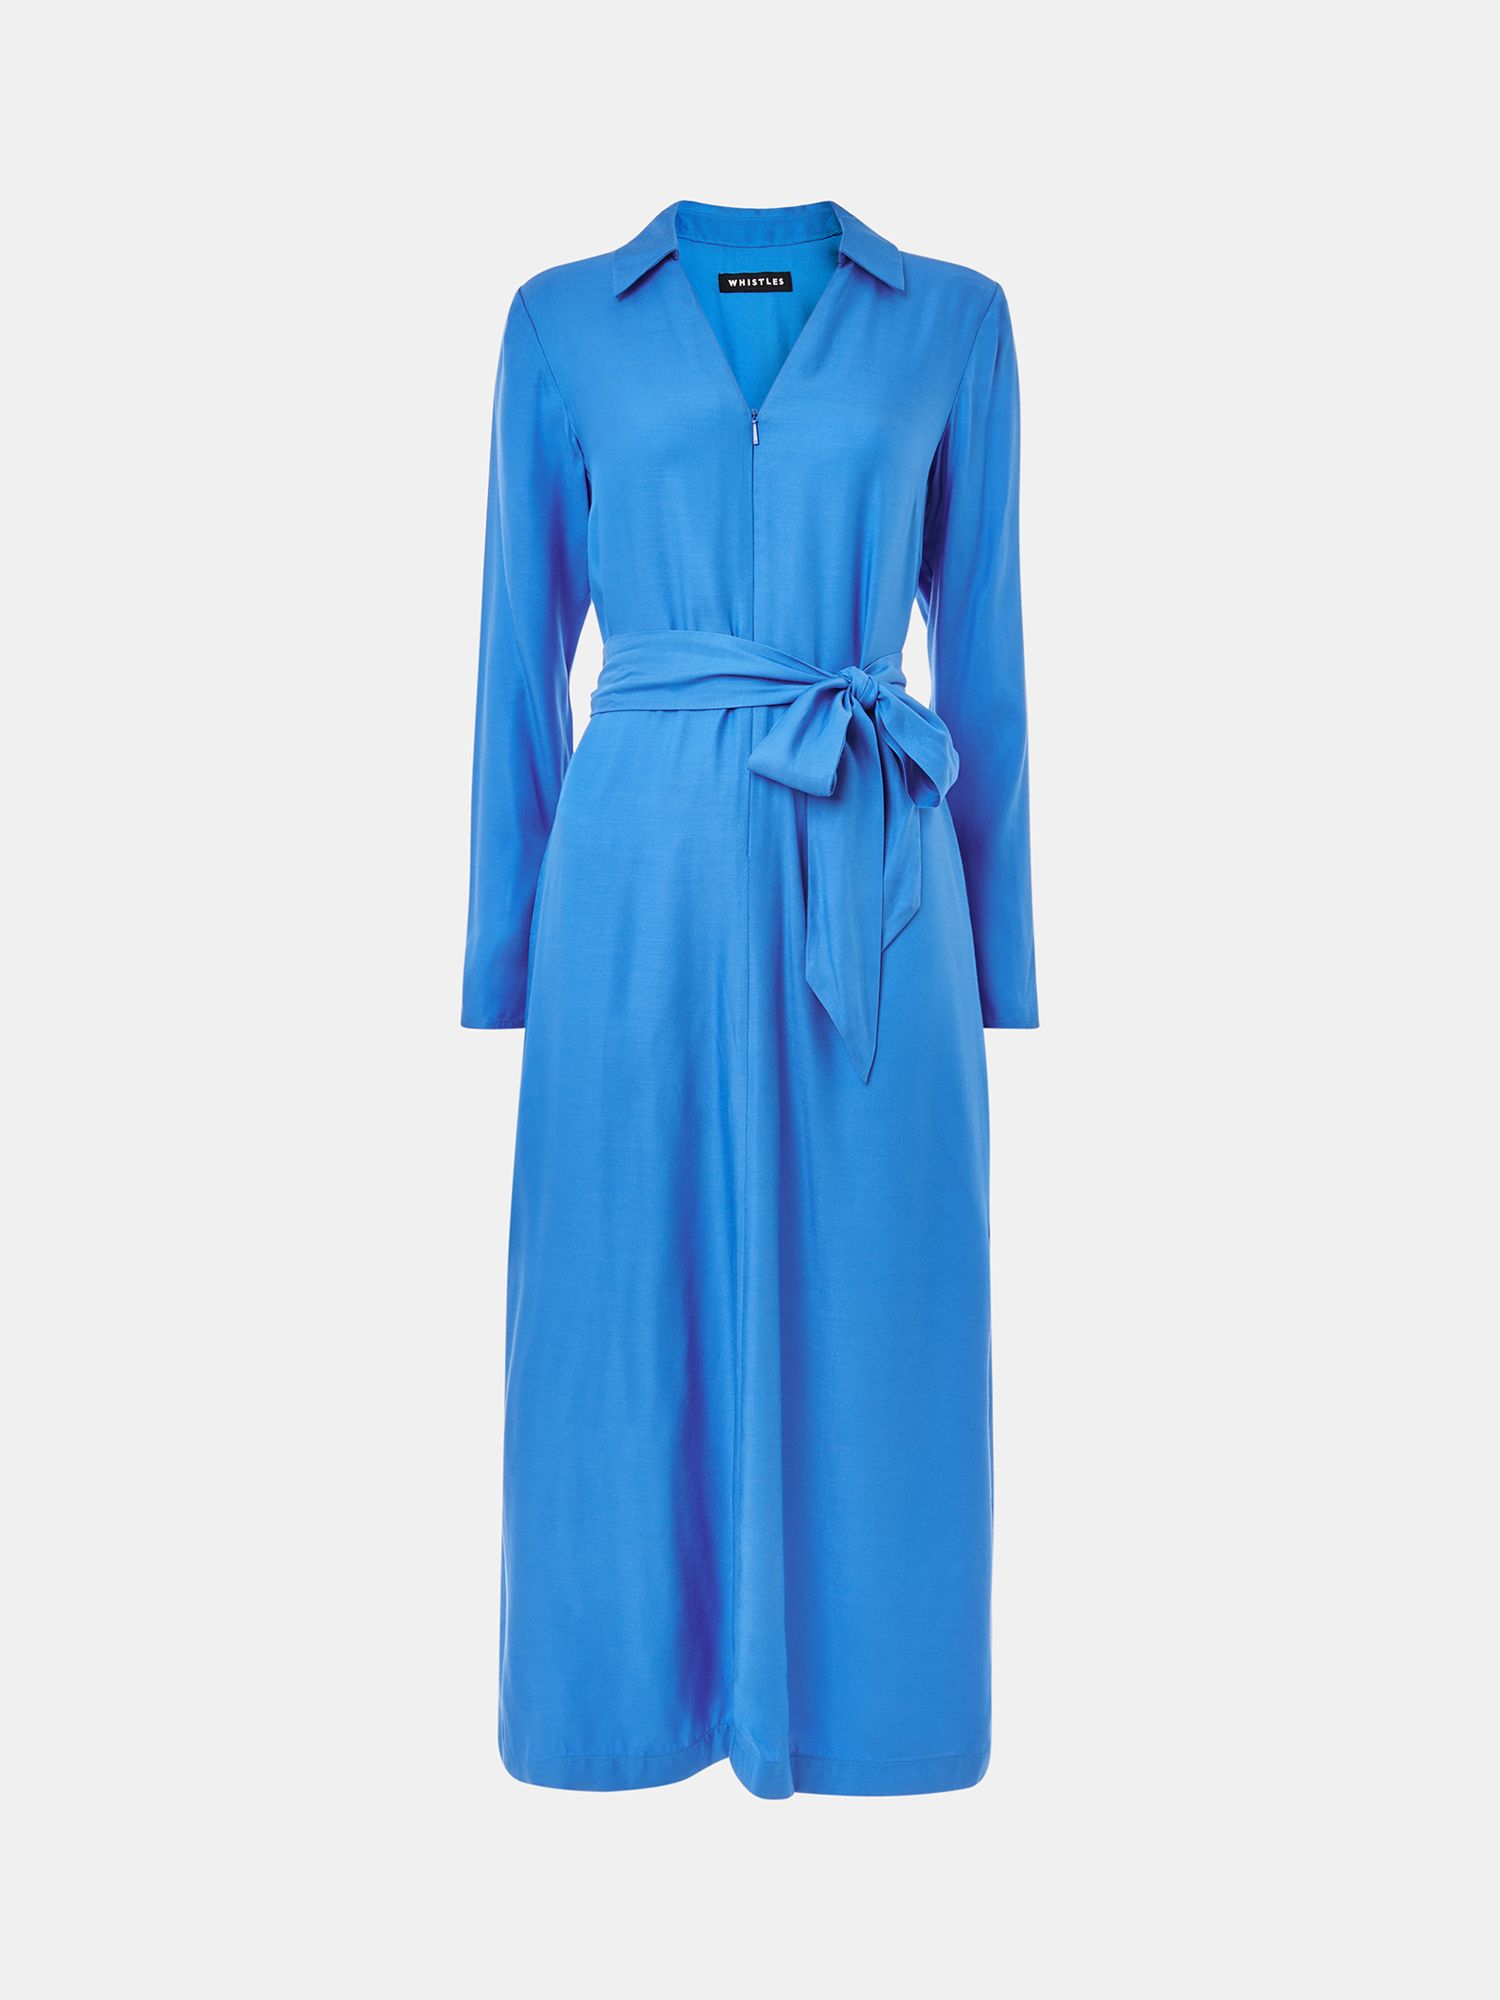 Whistles Tillie Tie Midi Dress, Blue at John Lewis & Partners